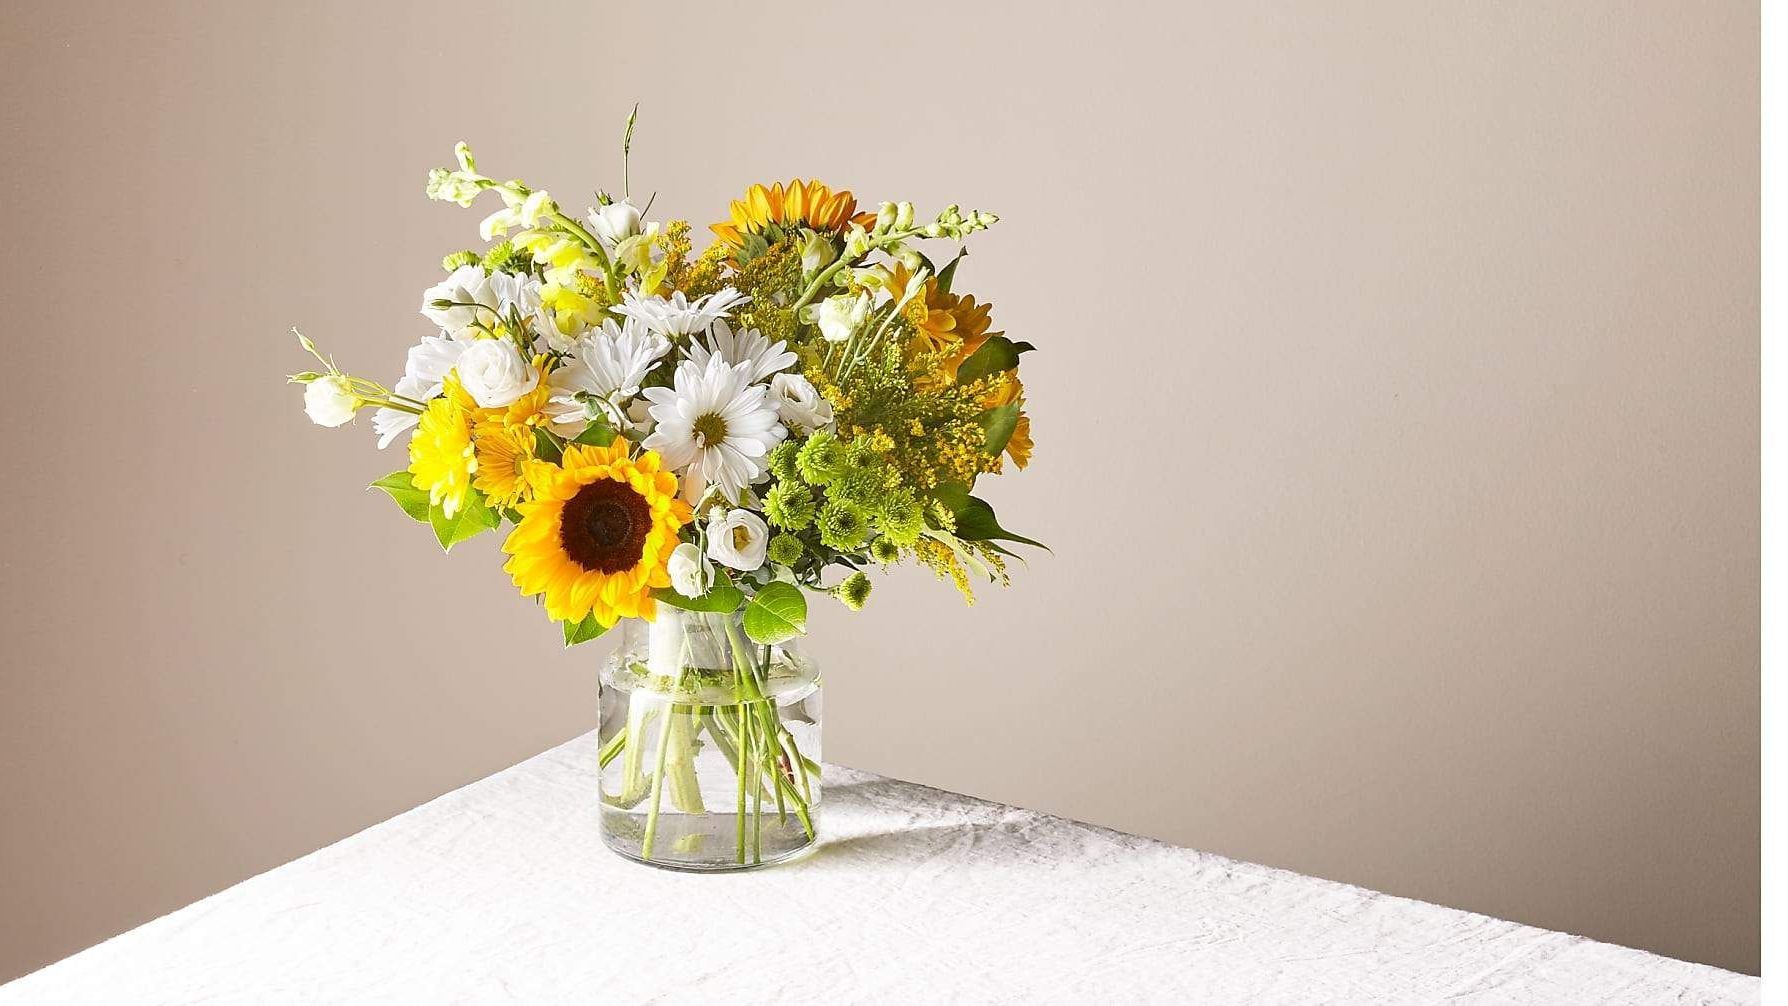 Bouquet Box Review: We Tried a DIY Flower Arranging Kit